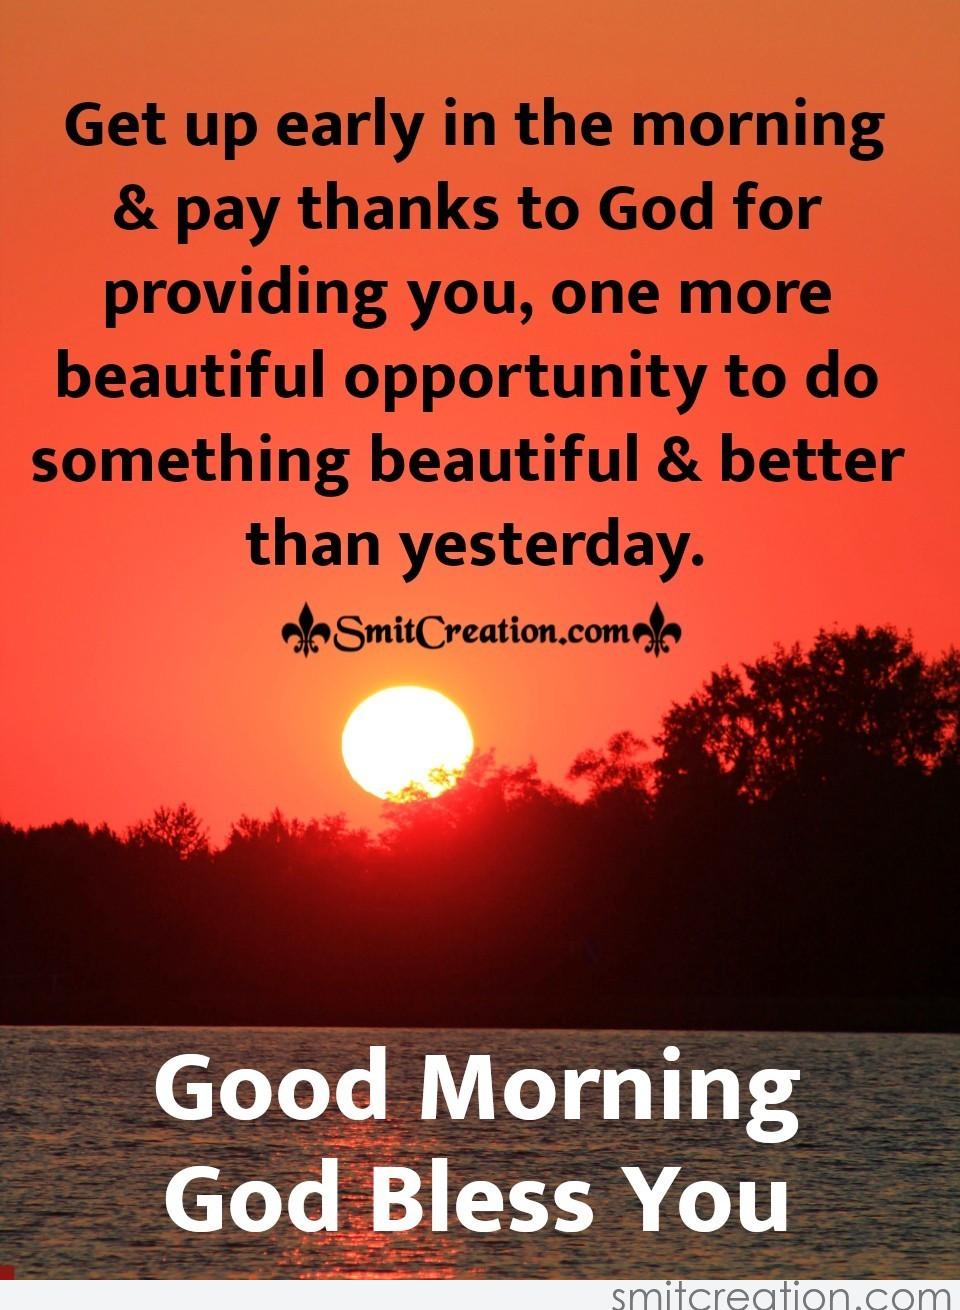 Good Morning God Quotes And Wishes Images - SmitCreation.com